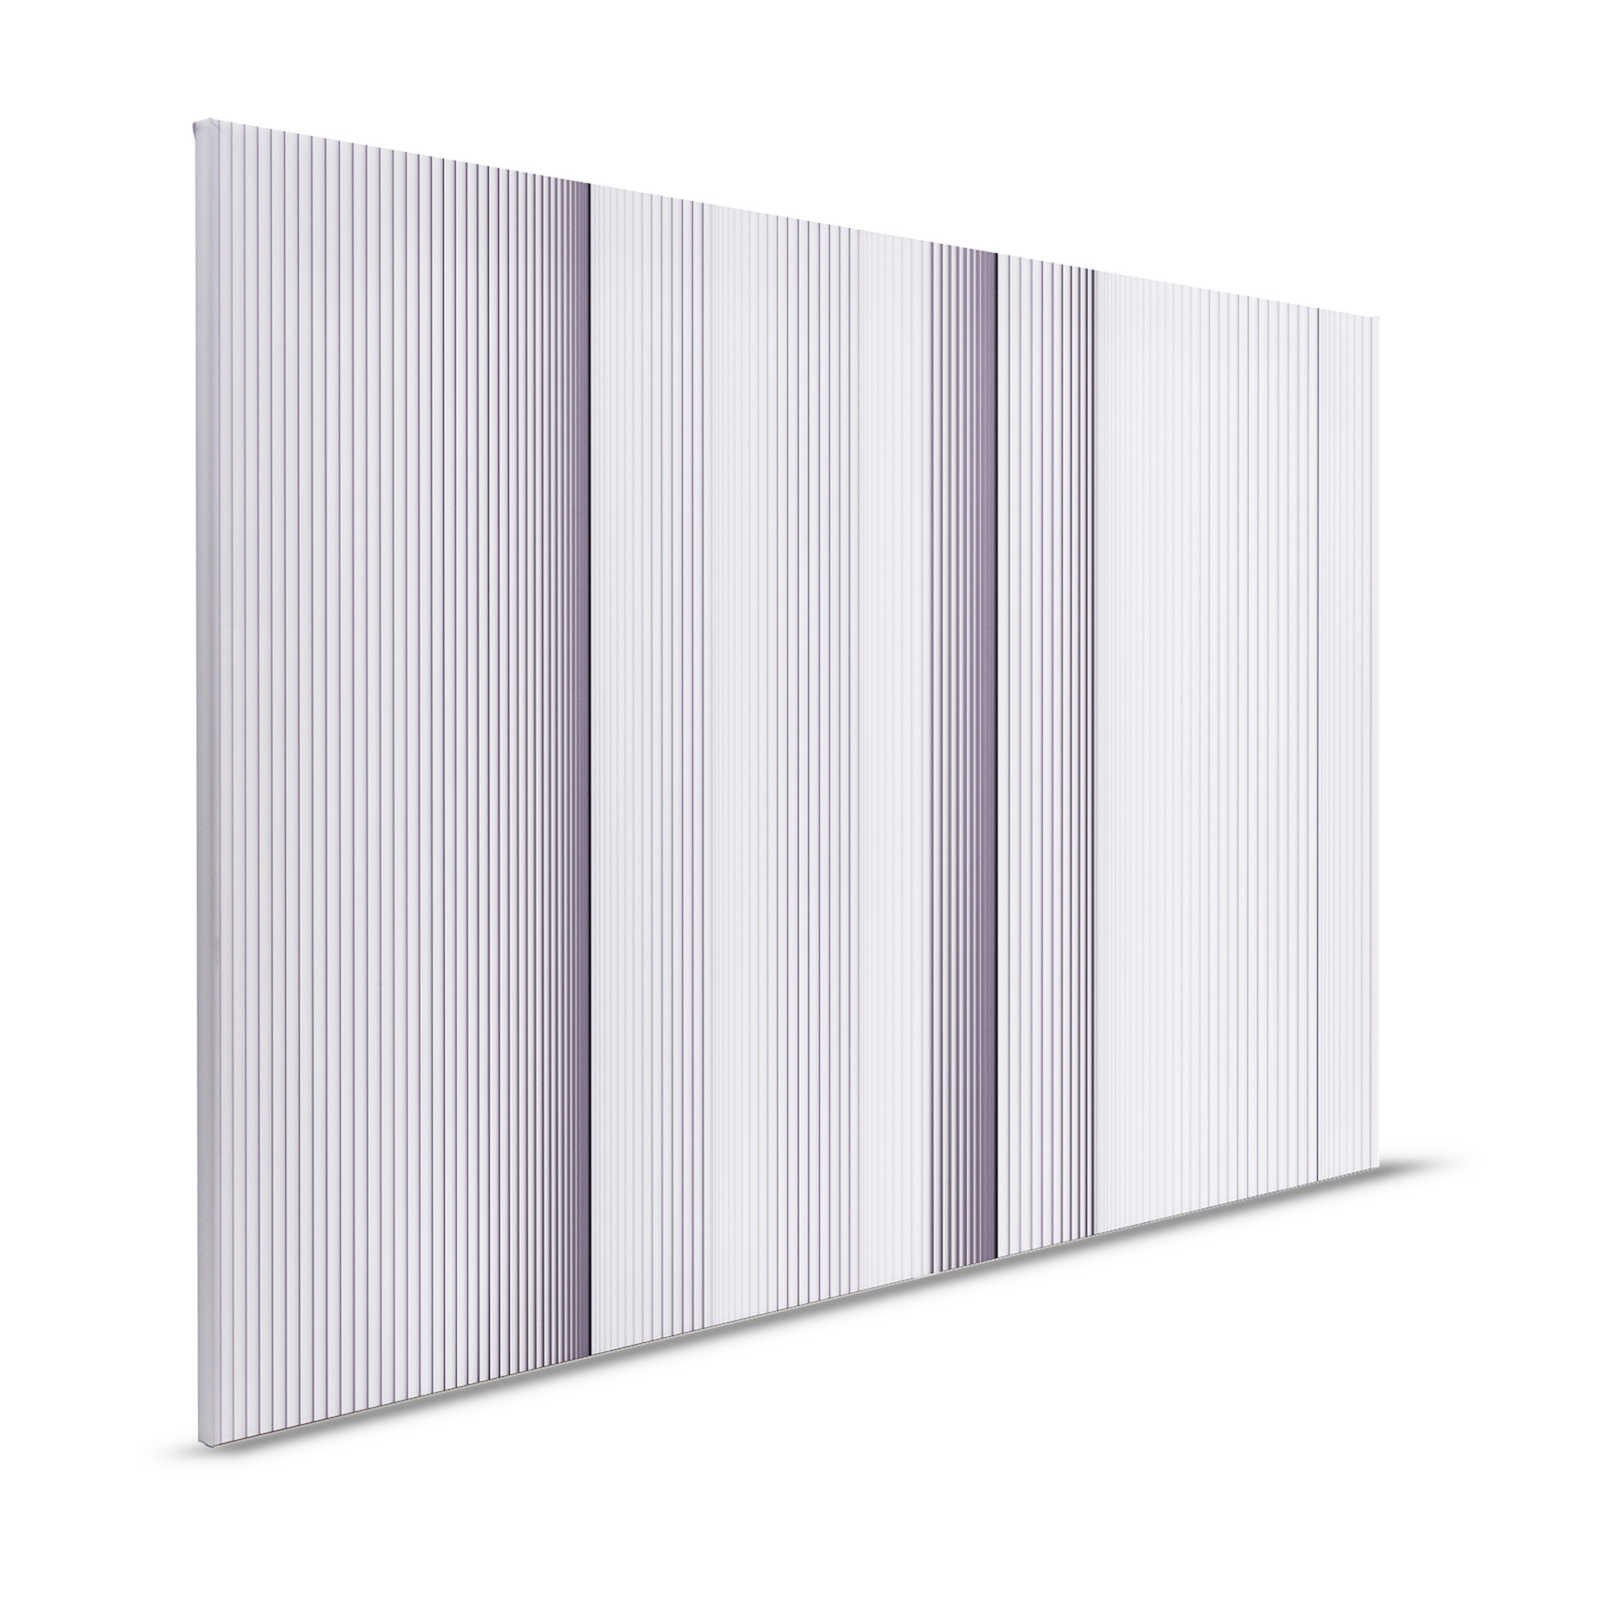 Magic Wall 1 - Streifen Leinwandbild 3D Illusion Effekt, Violett & Weiß – 1,20 m x 0,80 m
